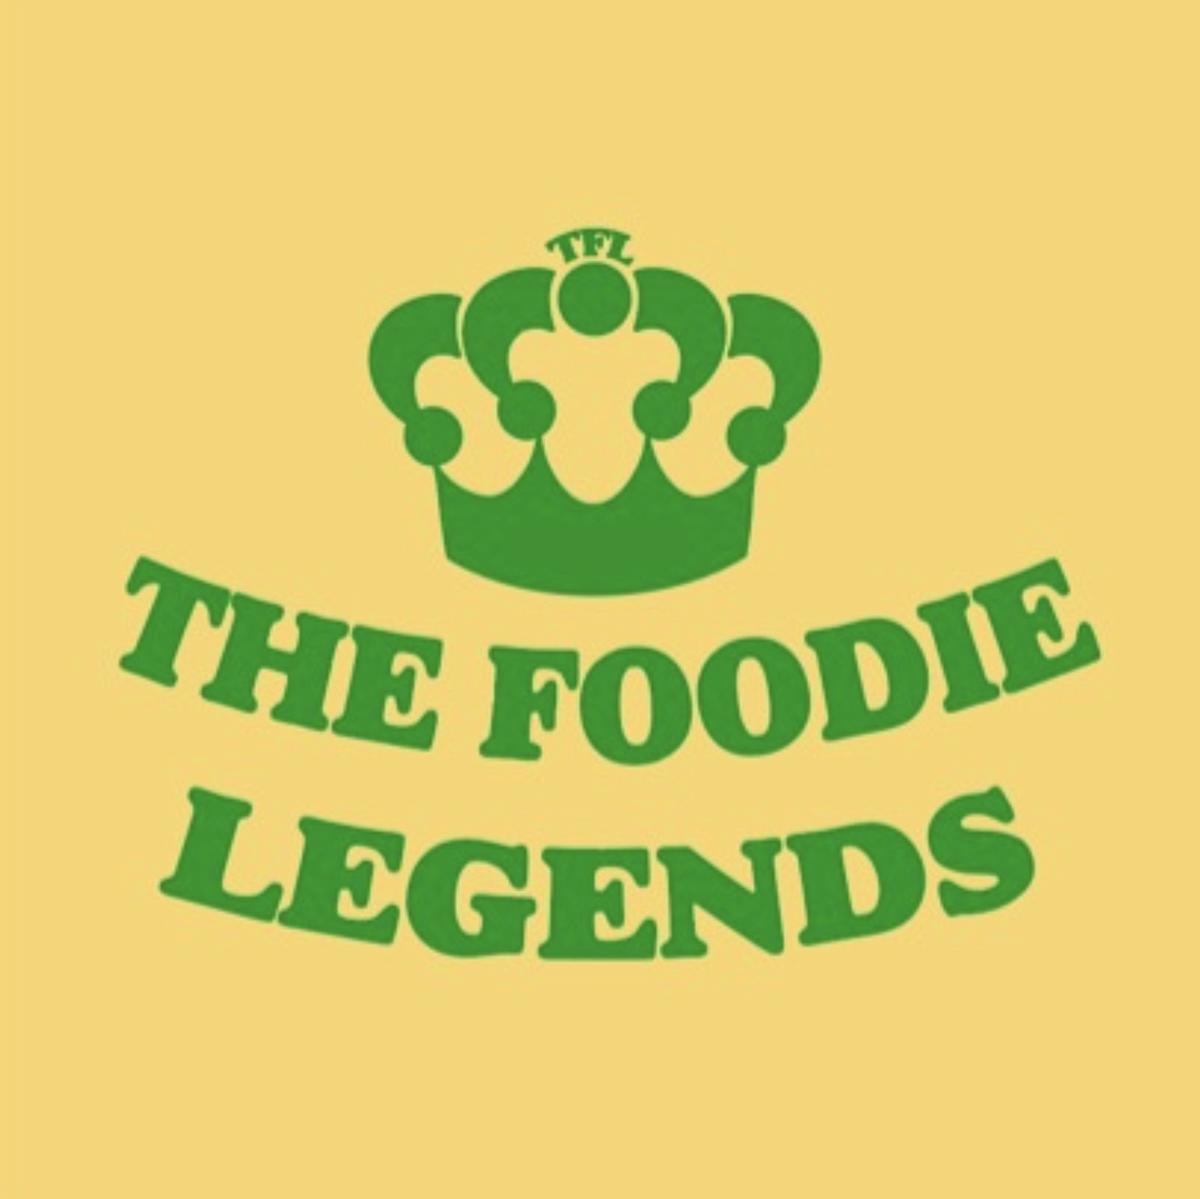 Foodie legends's images